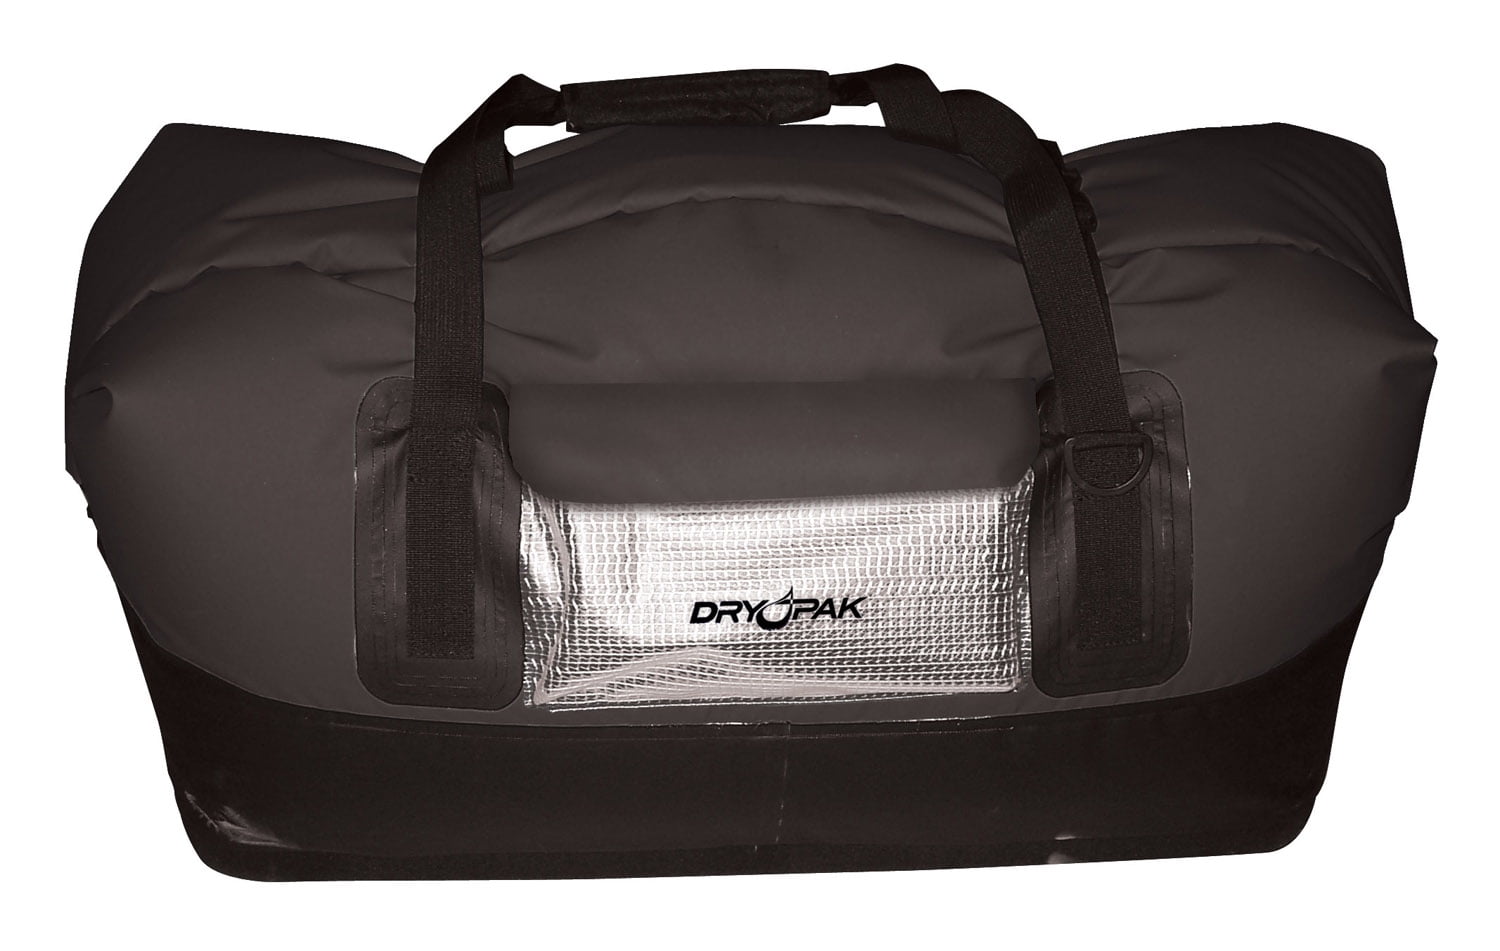 DRY PAK Waterproof Duffel Bag, XL, Black - 0 - 0